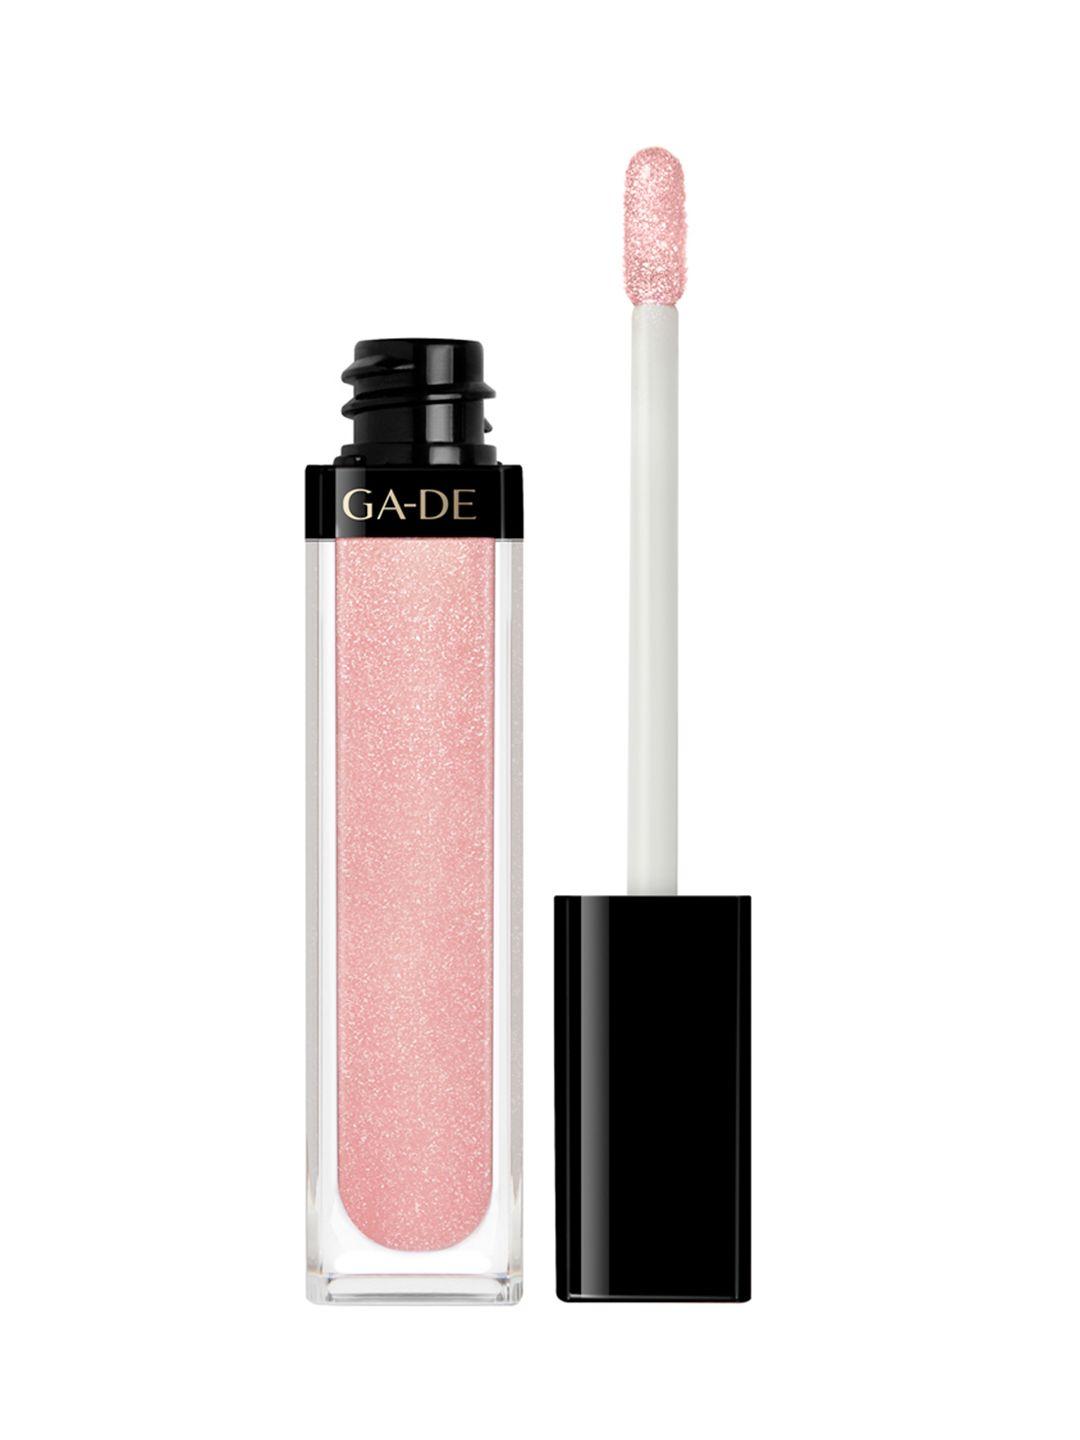 ga-de-long-lasting-&-moisturizing-crystal-lights-lip-gloss-6ml---rose-glitz-823